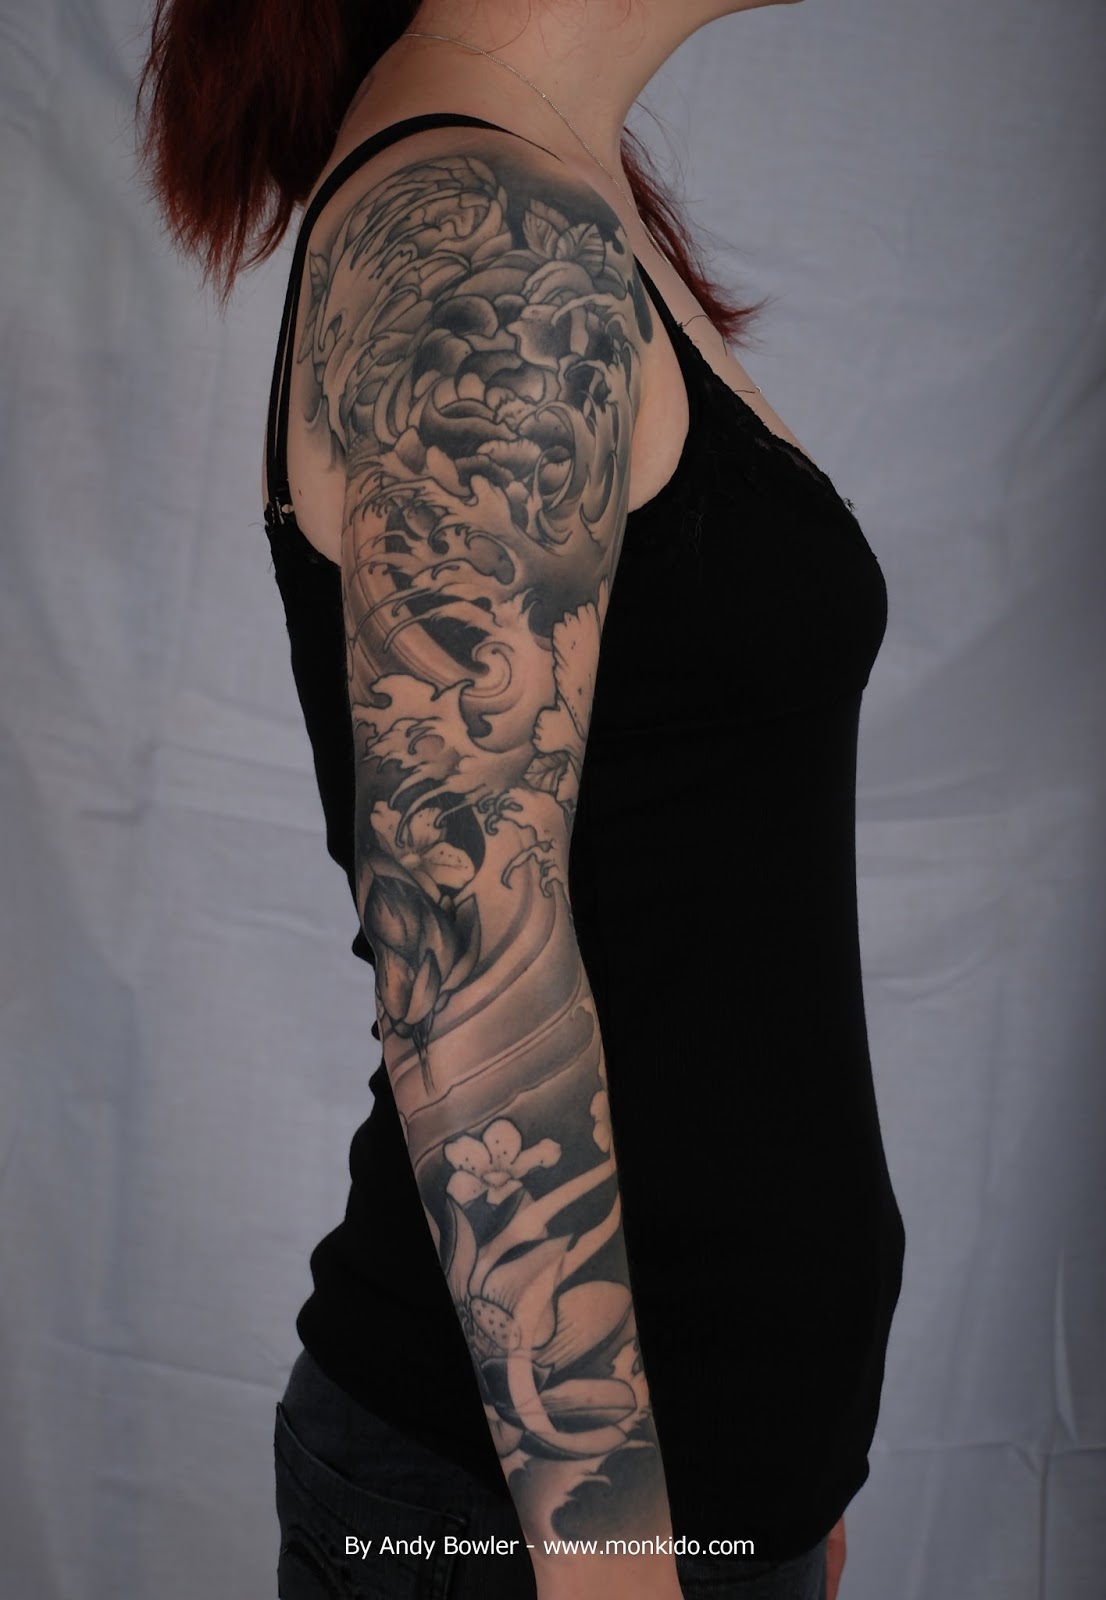 Monki Do Tattoo Studio: Custom Japanese Sleeve by Andy Bowler, Monki Do